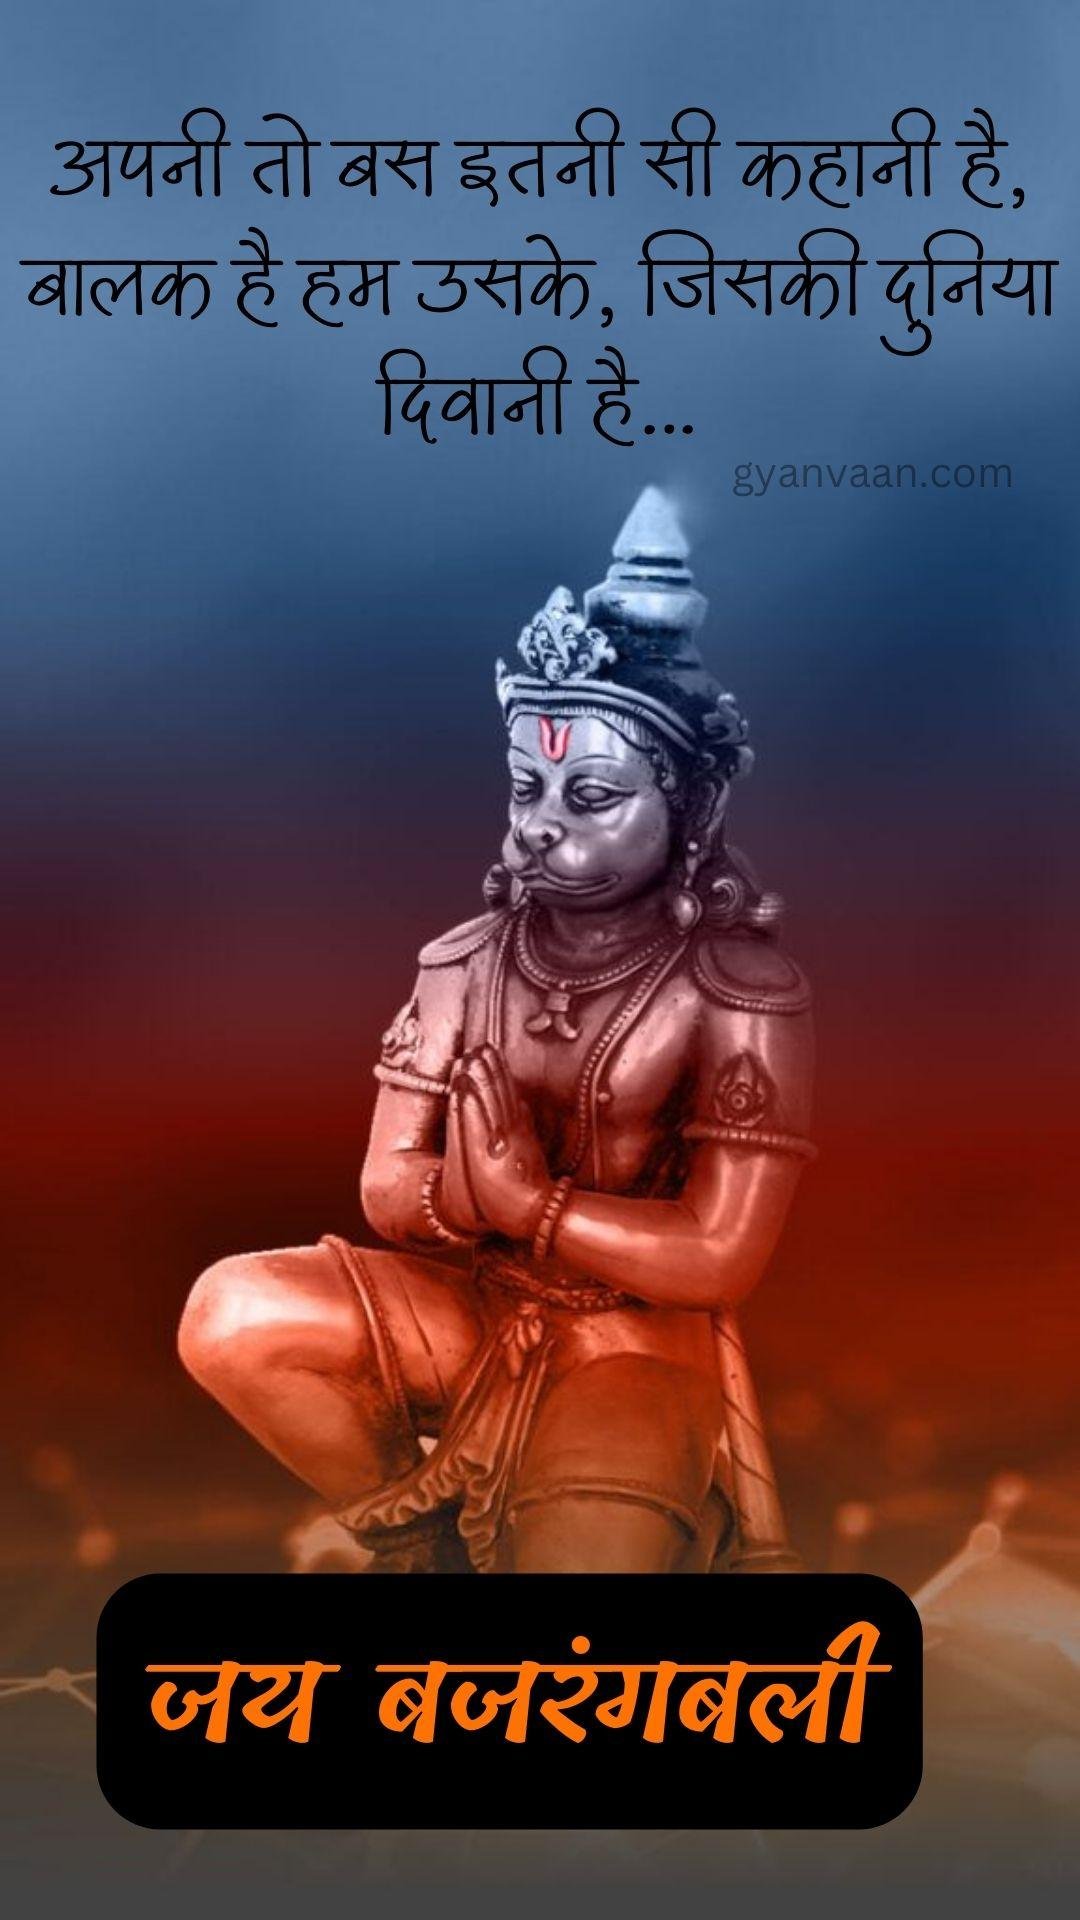 Hanuman Quotes Shayari And Whatsapp Status For Mobile With Hanuman Images And Photos 54 - Hanuman Images